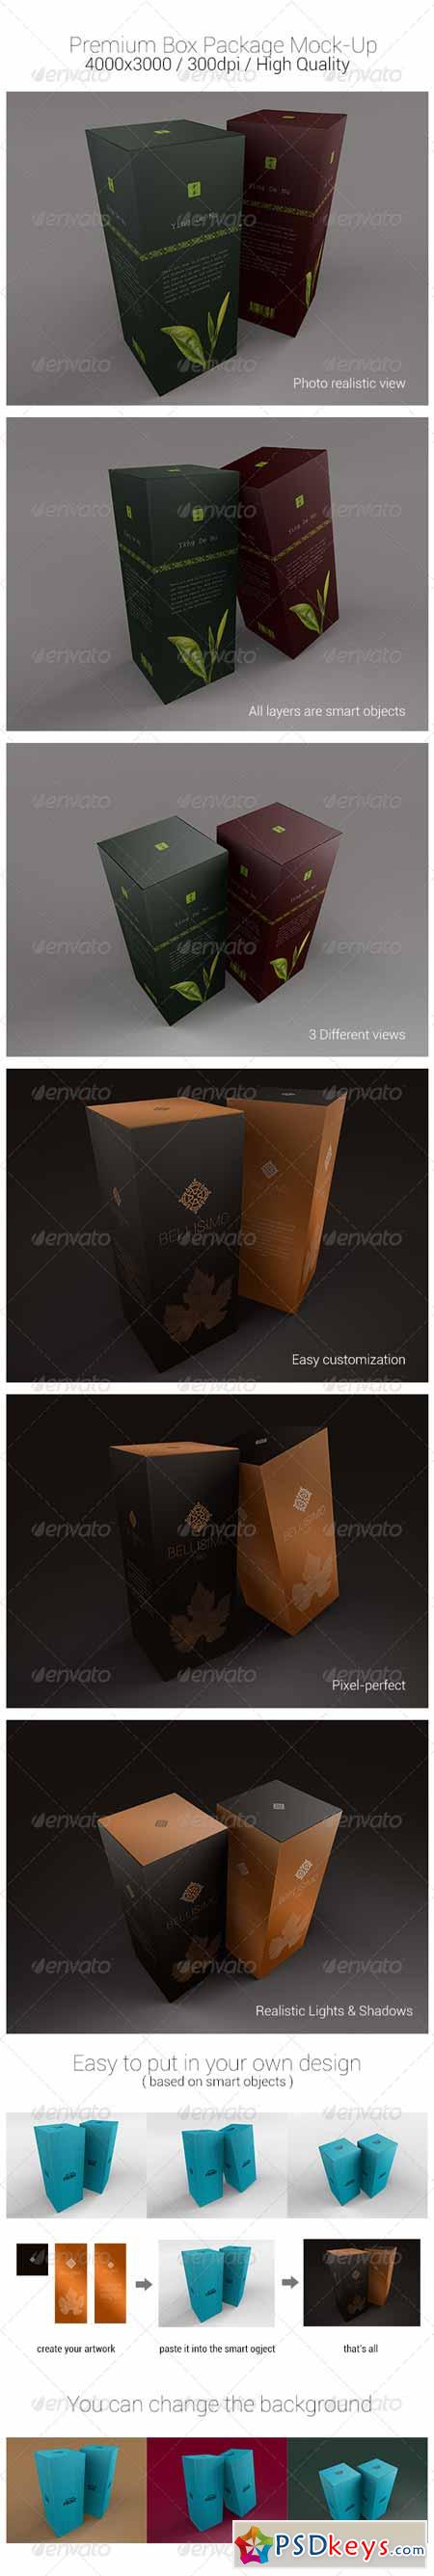 Premium Box Package Mock-Ups 4732413